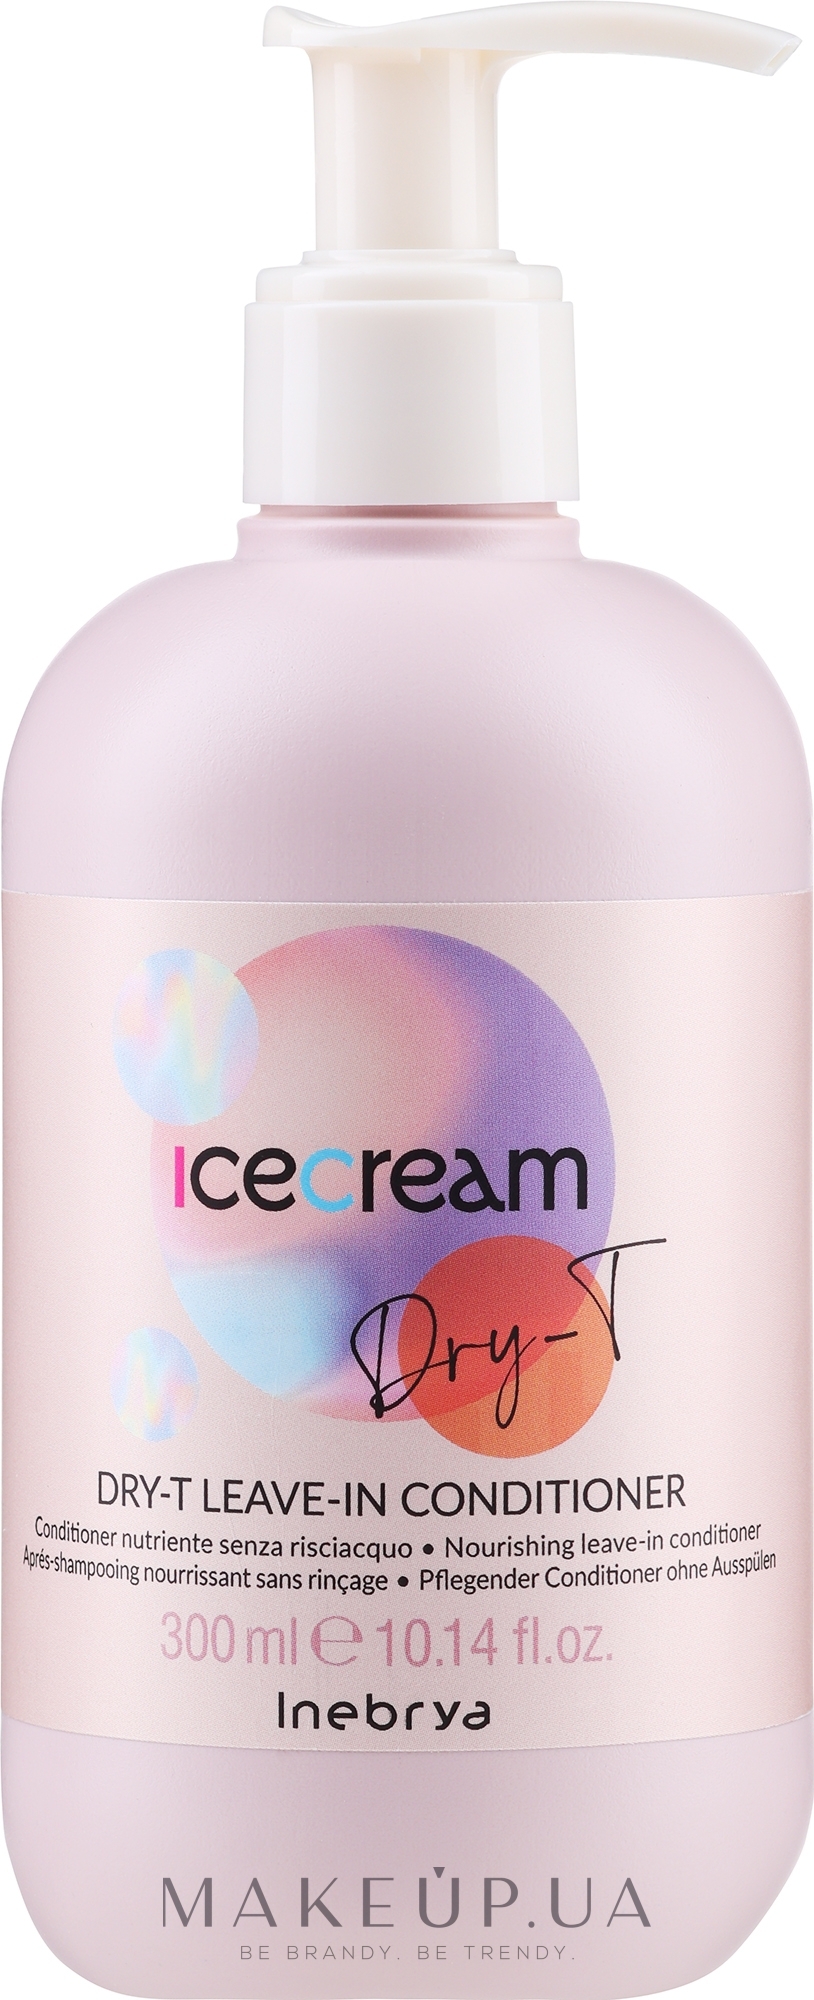 Питательный несмываемый кондиционер для волос - Inebrya Ice Cream Dry-T Leave-In Conditioner  — фото 300ml